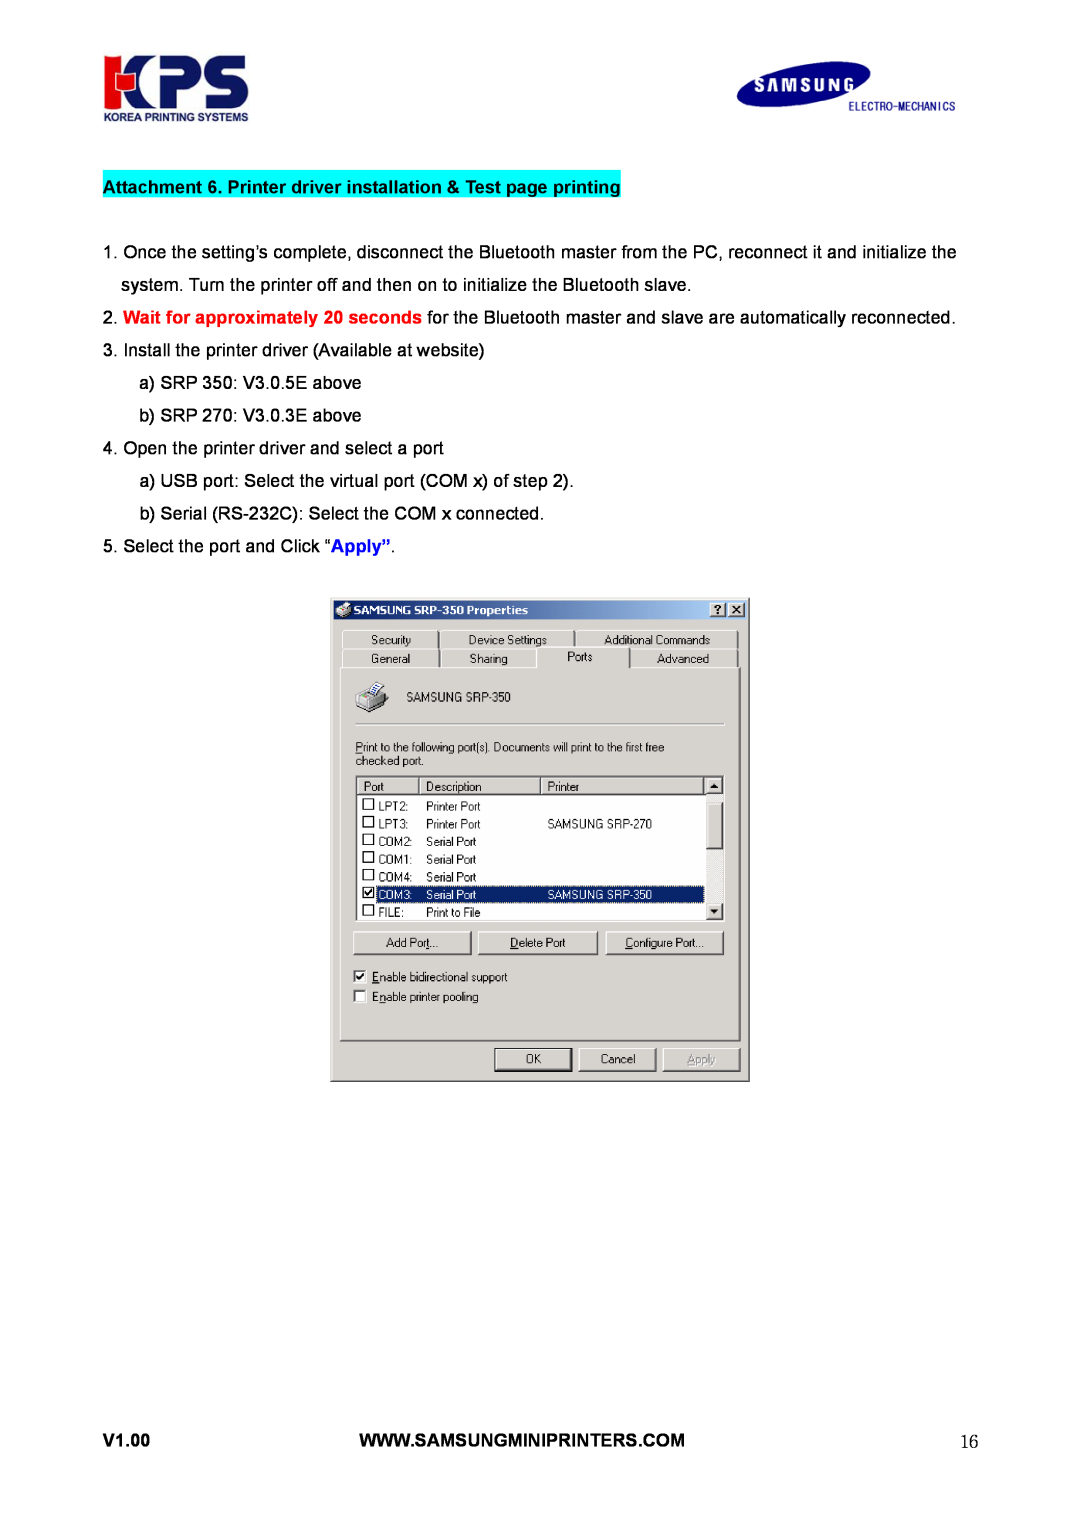 Samsung RIF-BT10 user manual Attachment 6. Printer driver installation & Test page printing, V1.00 